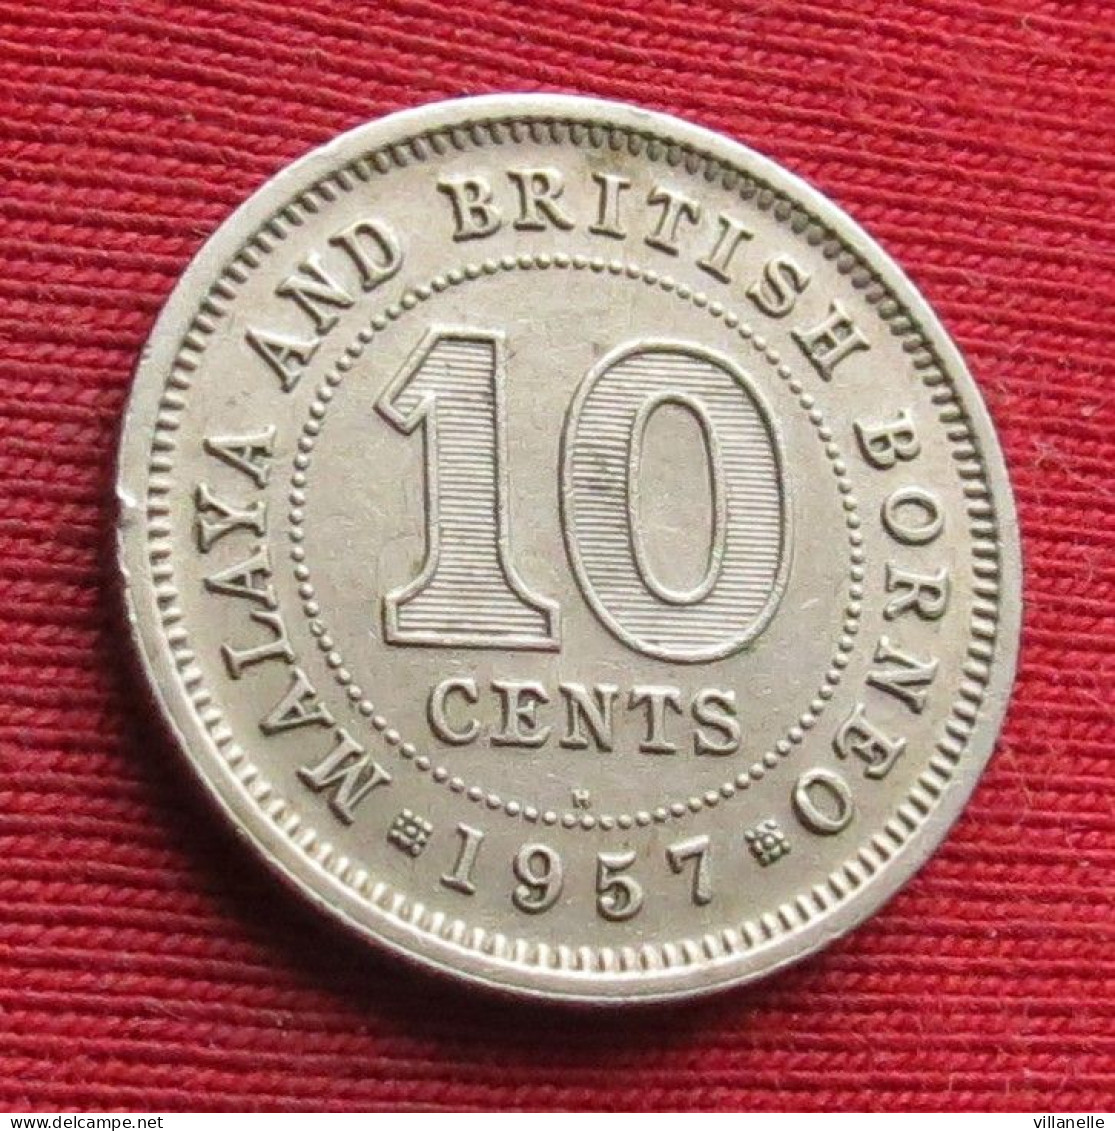 Malaya And British Borneo 10 Cents 1957 H W ºº - Maleisië